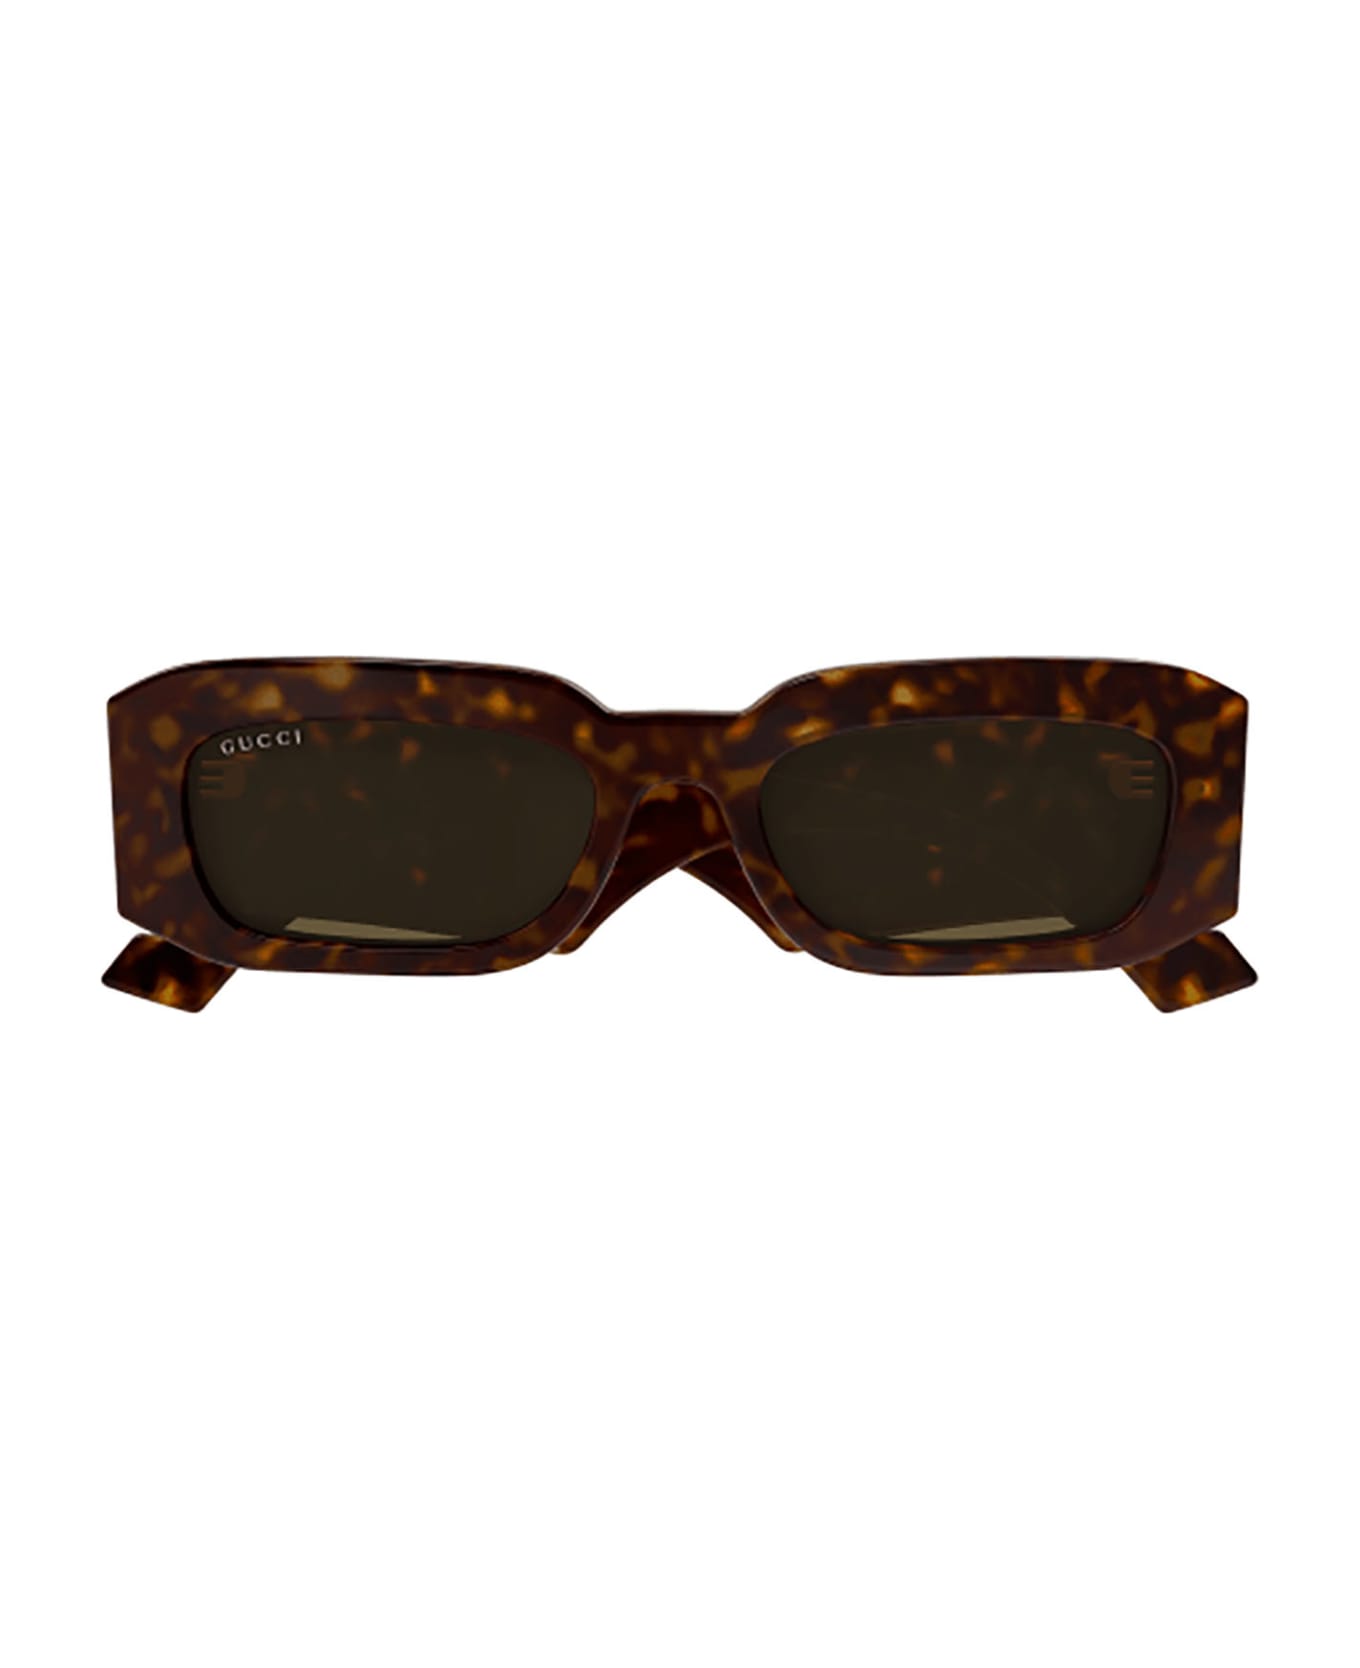 Gucci Eyewear GG1426S Sunglasses - Havana Havana Brown サングラス